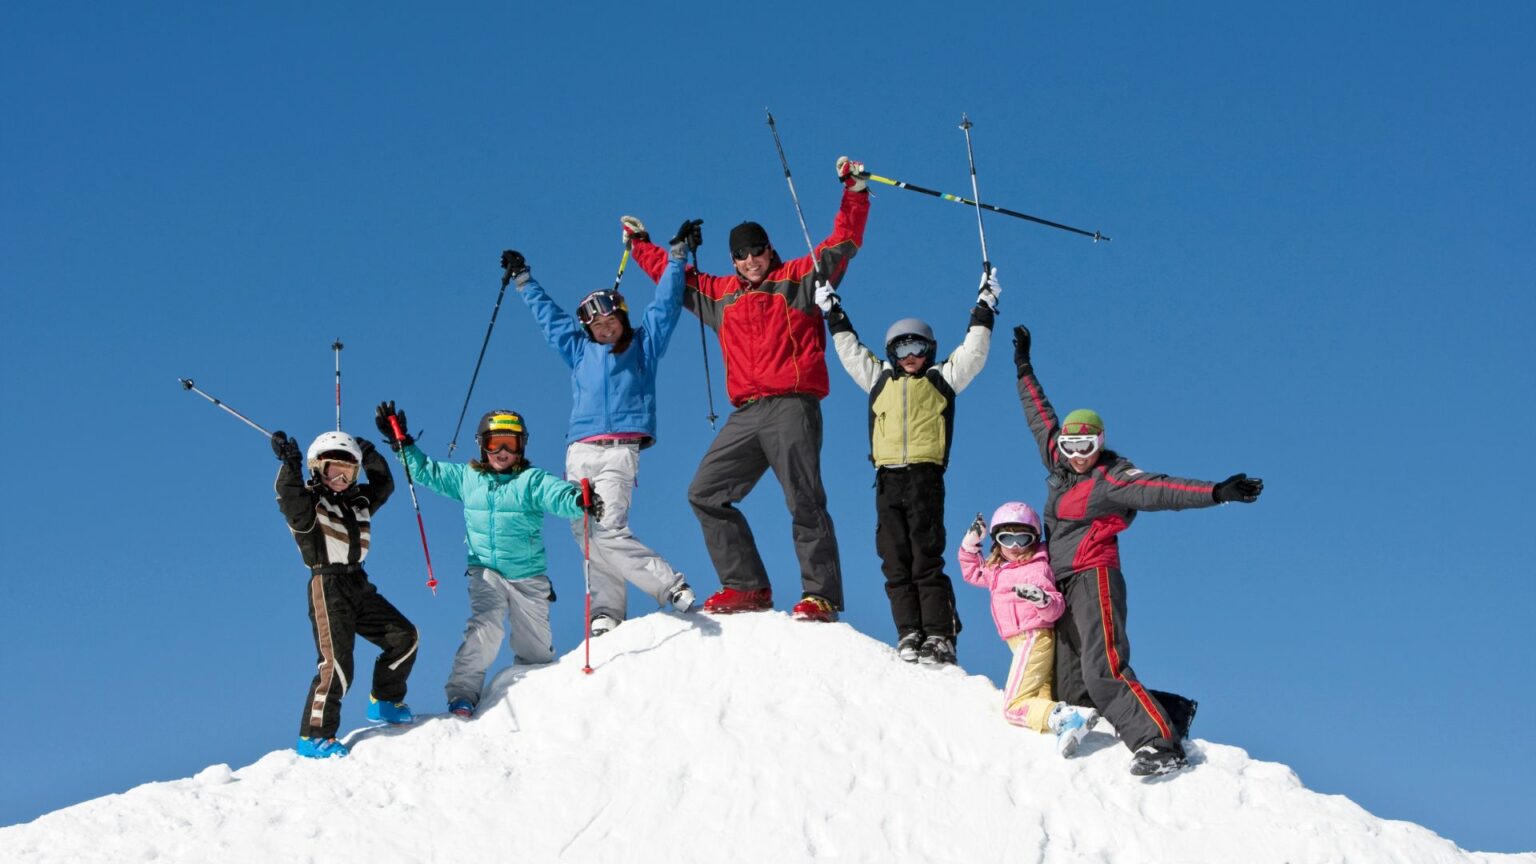 What equipment do you need to ski